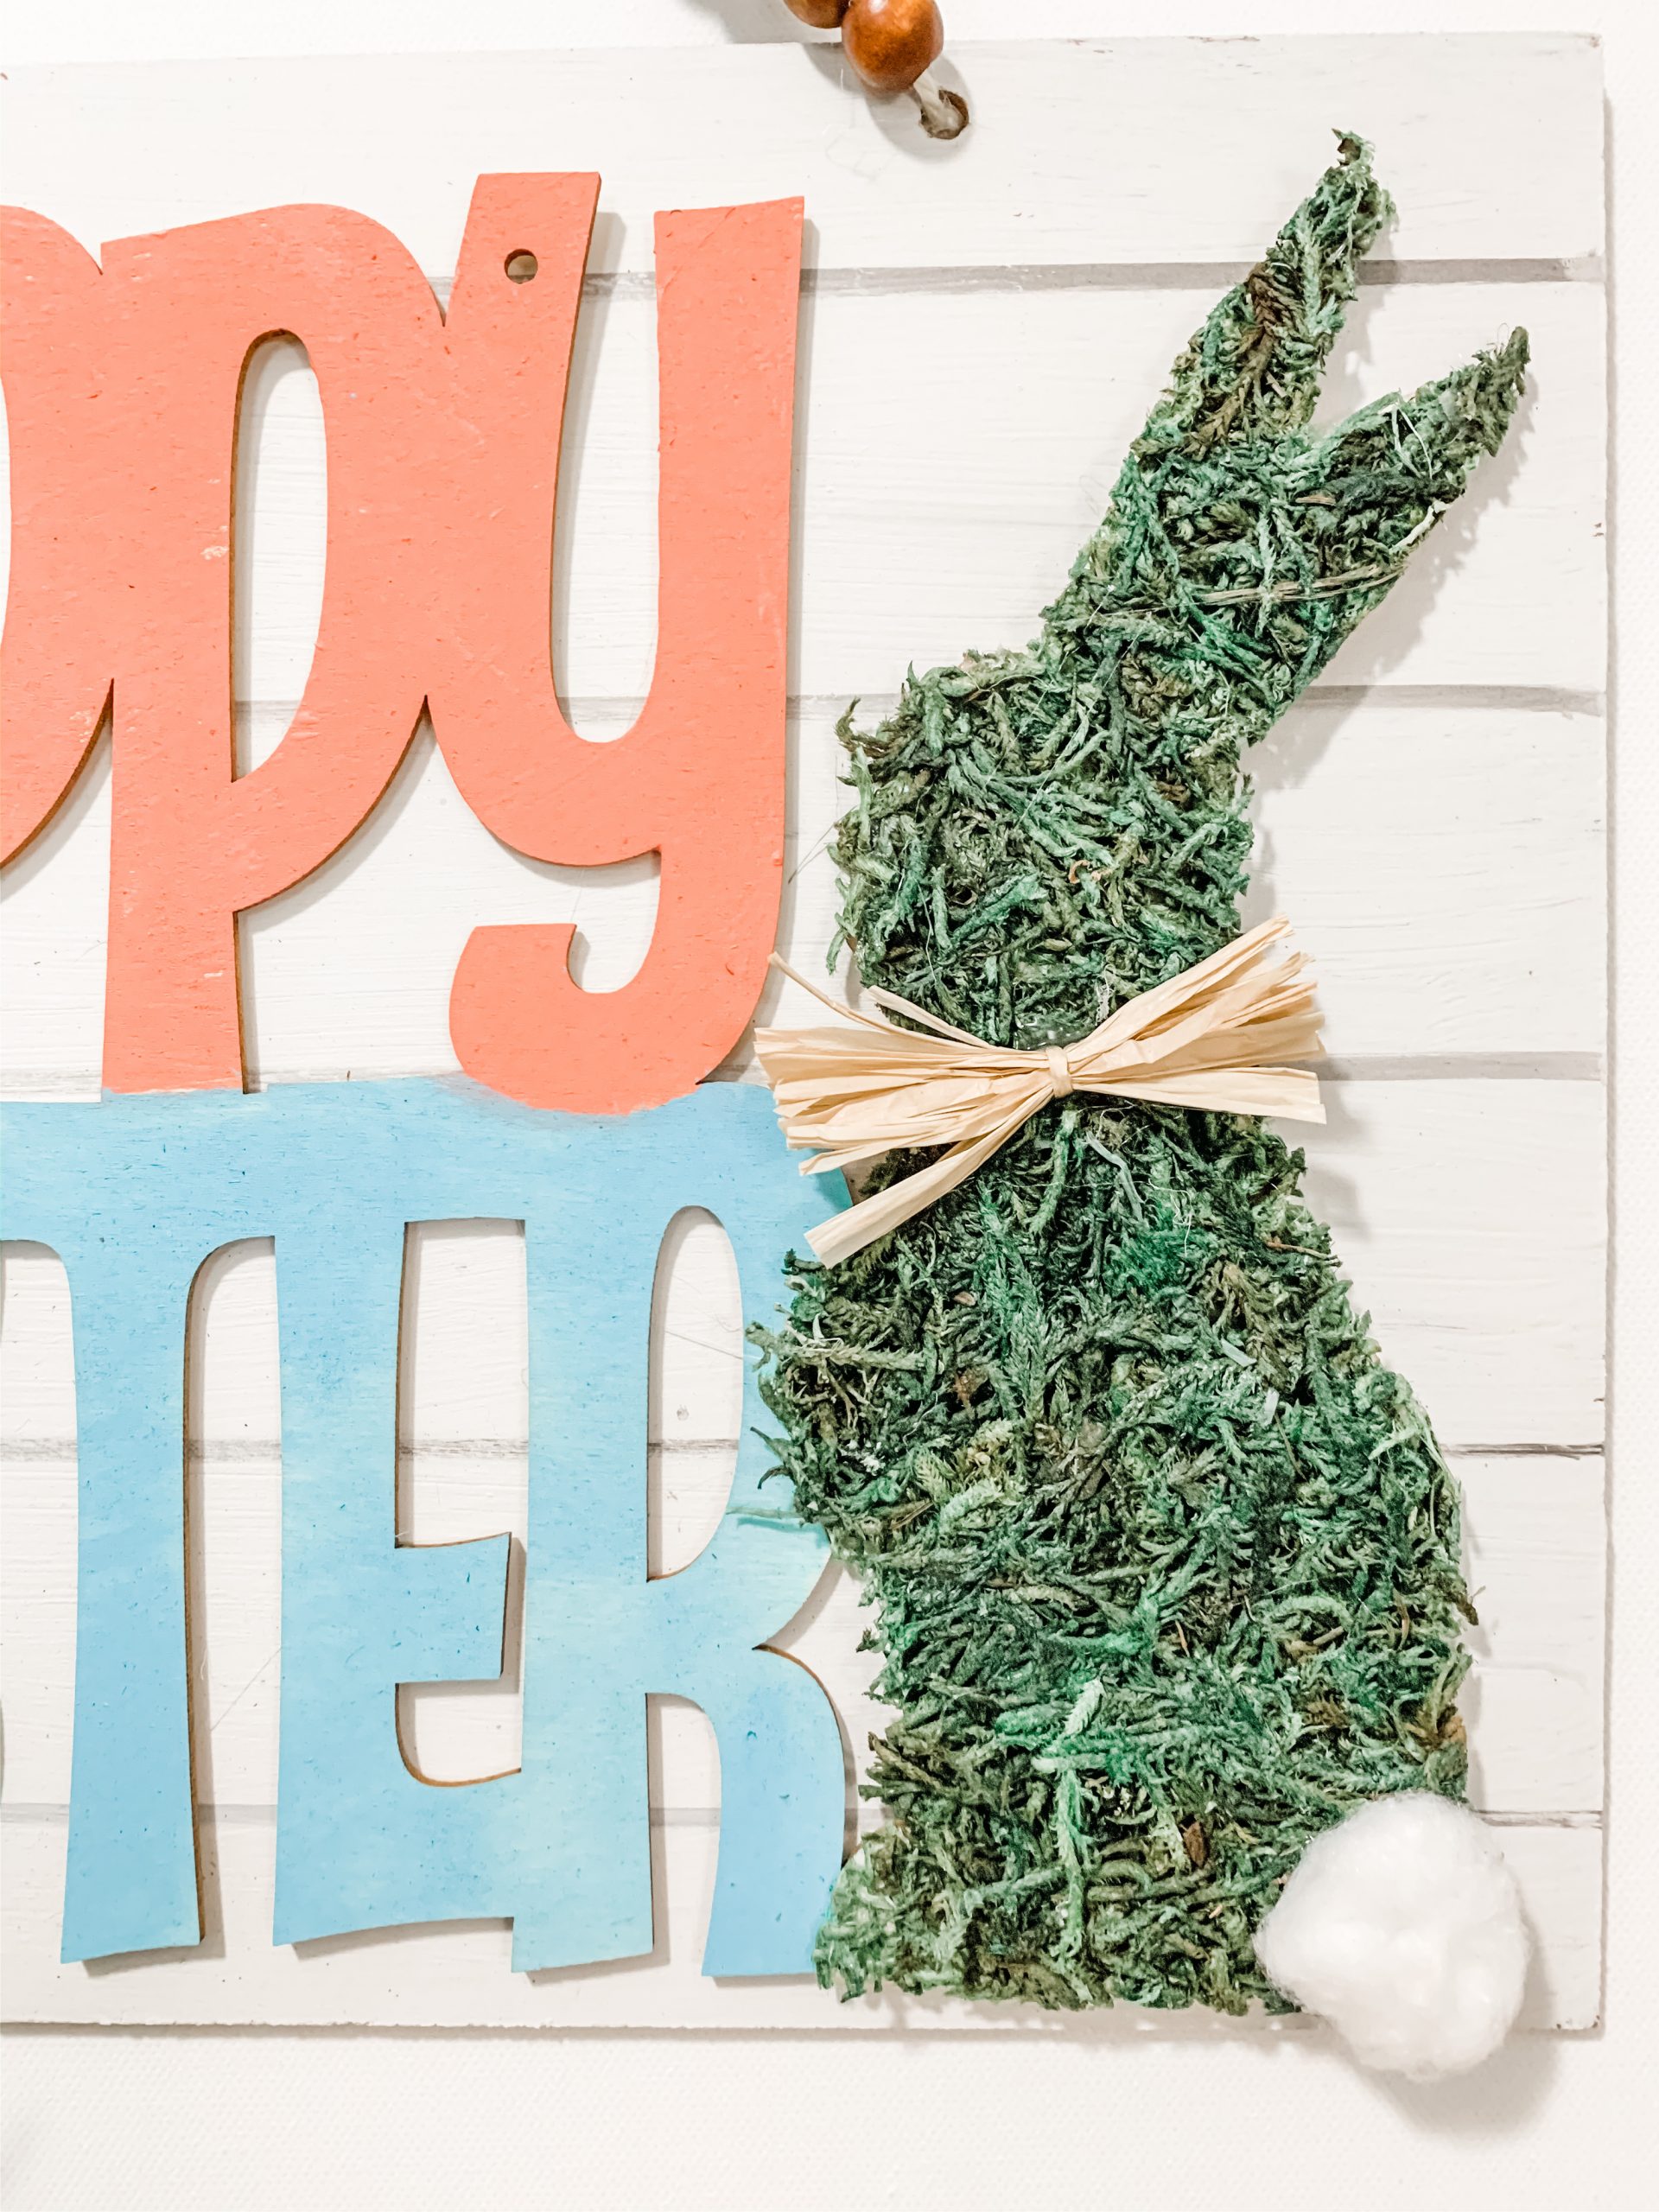 Dollar Tree Mossy Bunny Easter Decor DIY